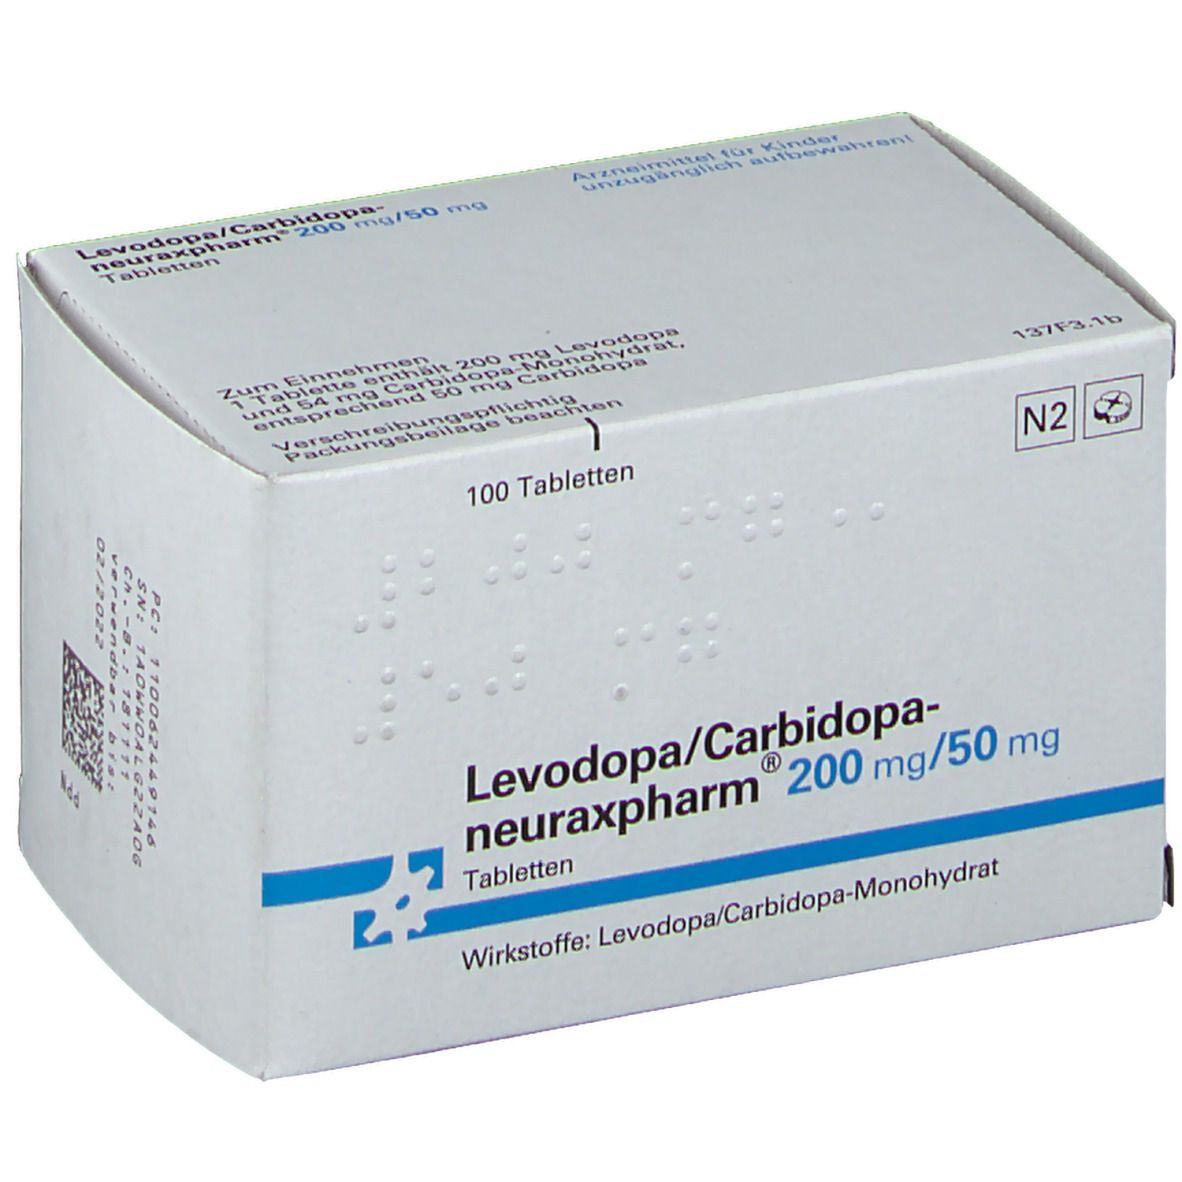 Levodopa/Carbidopa-neuraxpharm® 200 mg/50 mg